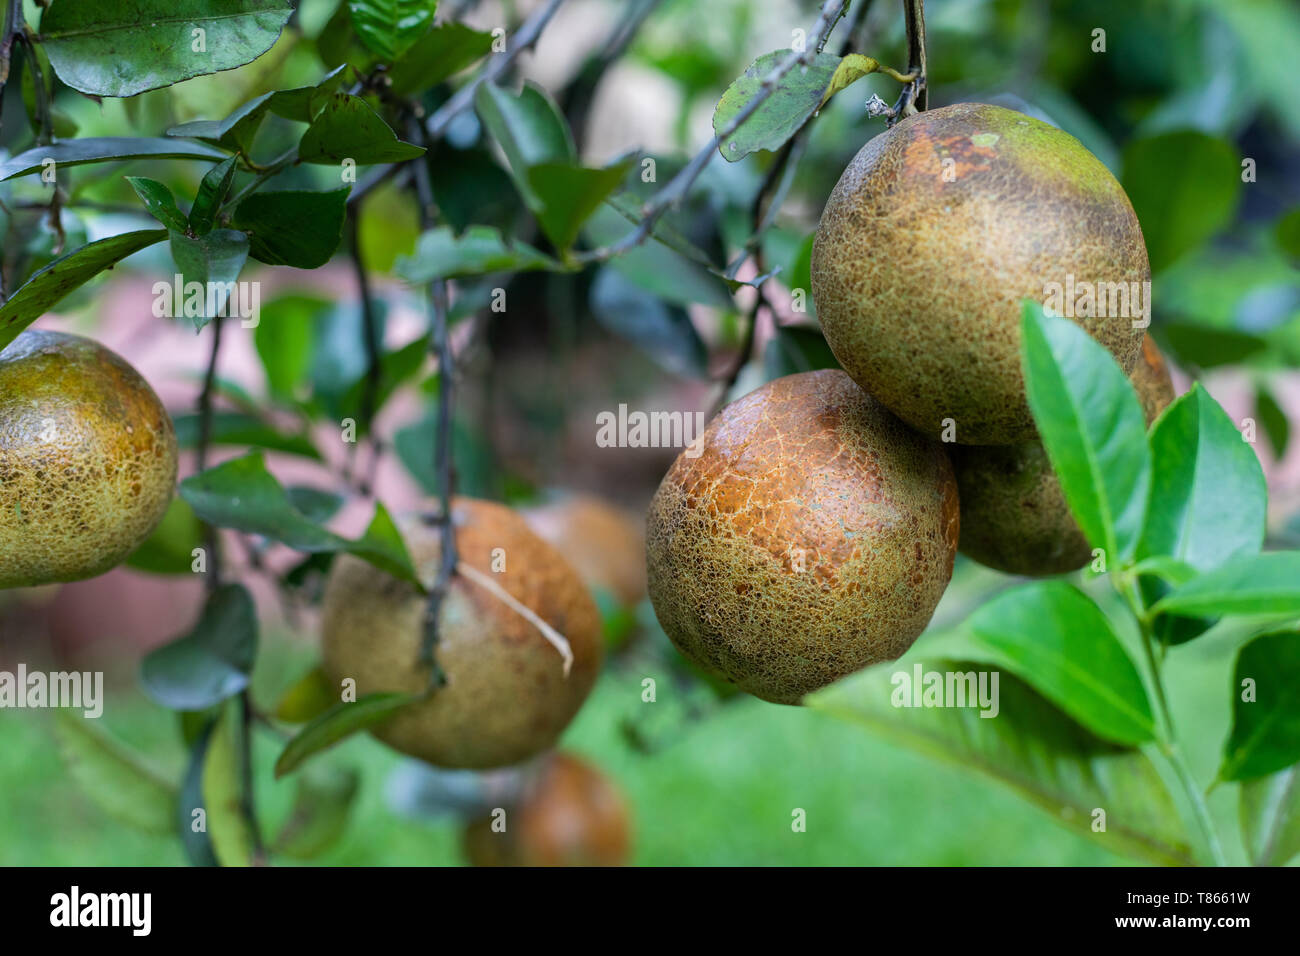 Organic Lemonade fruit (citrus limon x reticulata) with a discoloured skin condition in an Australian backyard garden Stock Photo